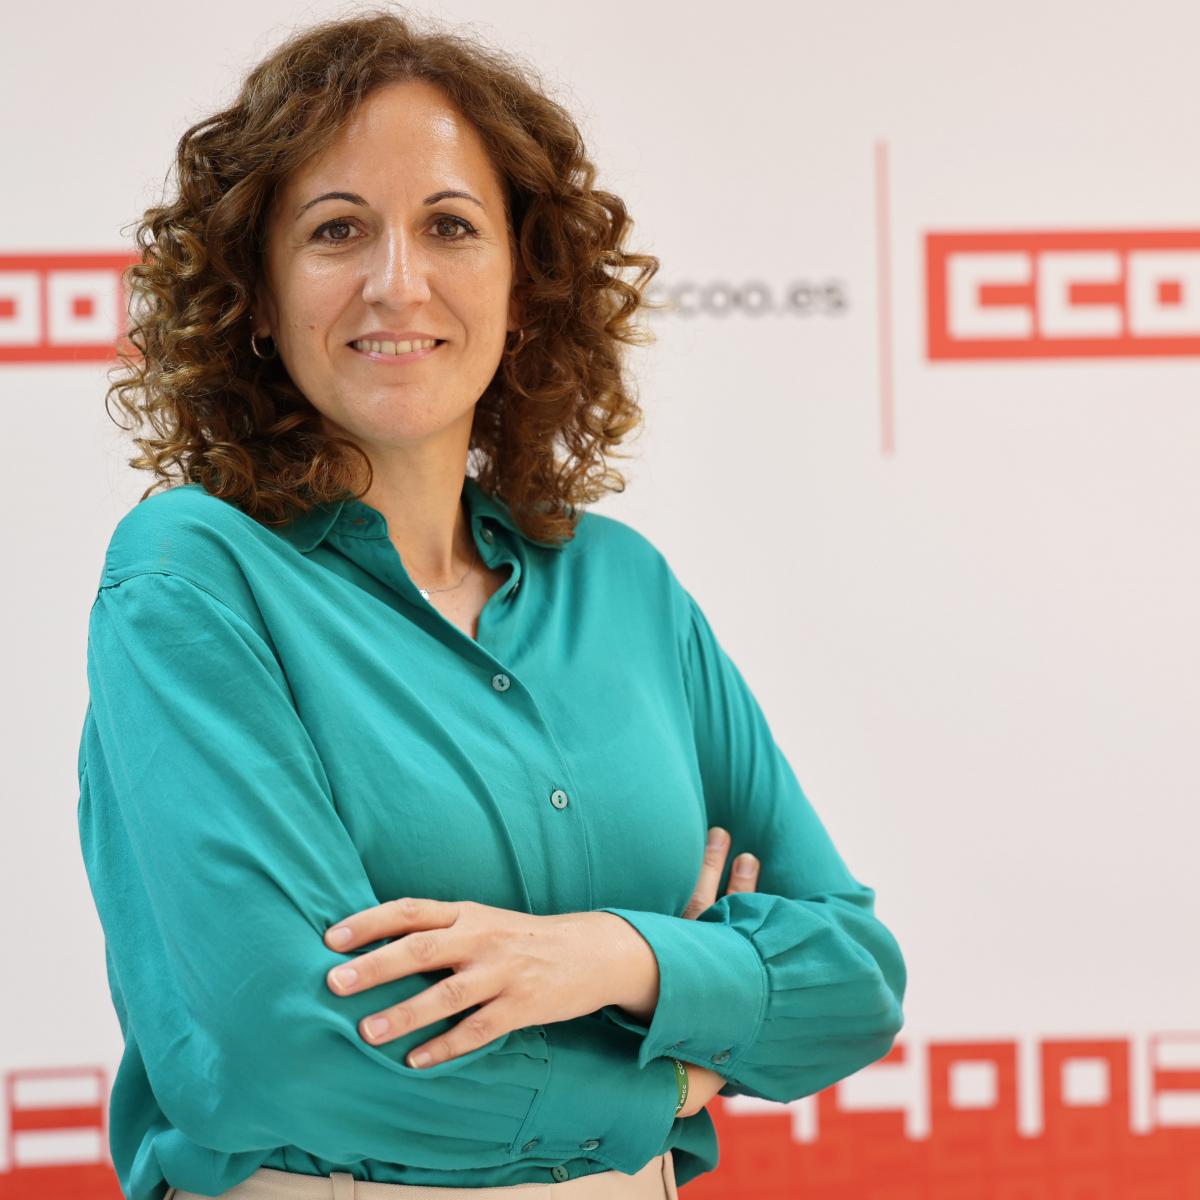 Nuria Lpez, secretaria general de CCOO de Andaluca